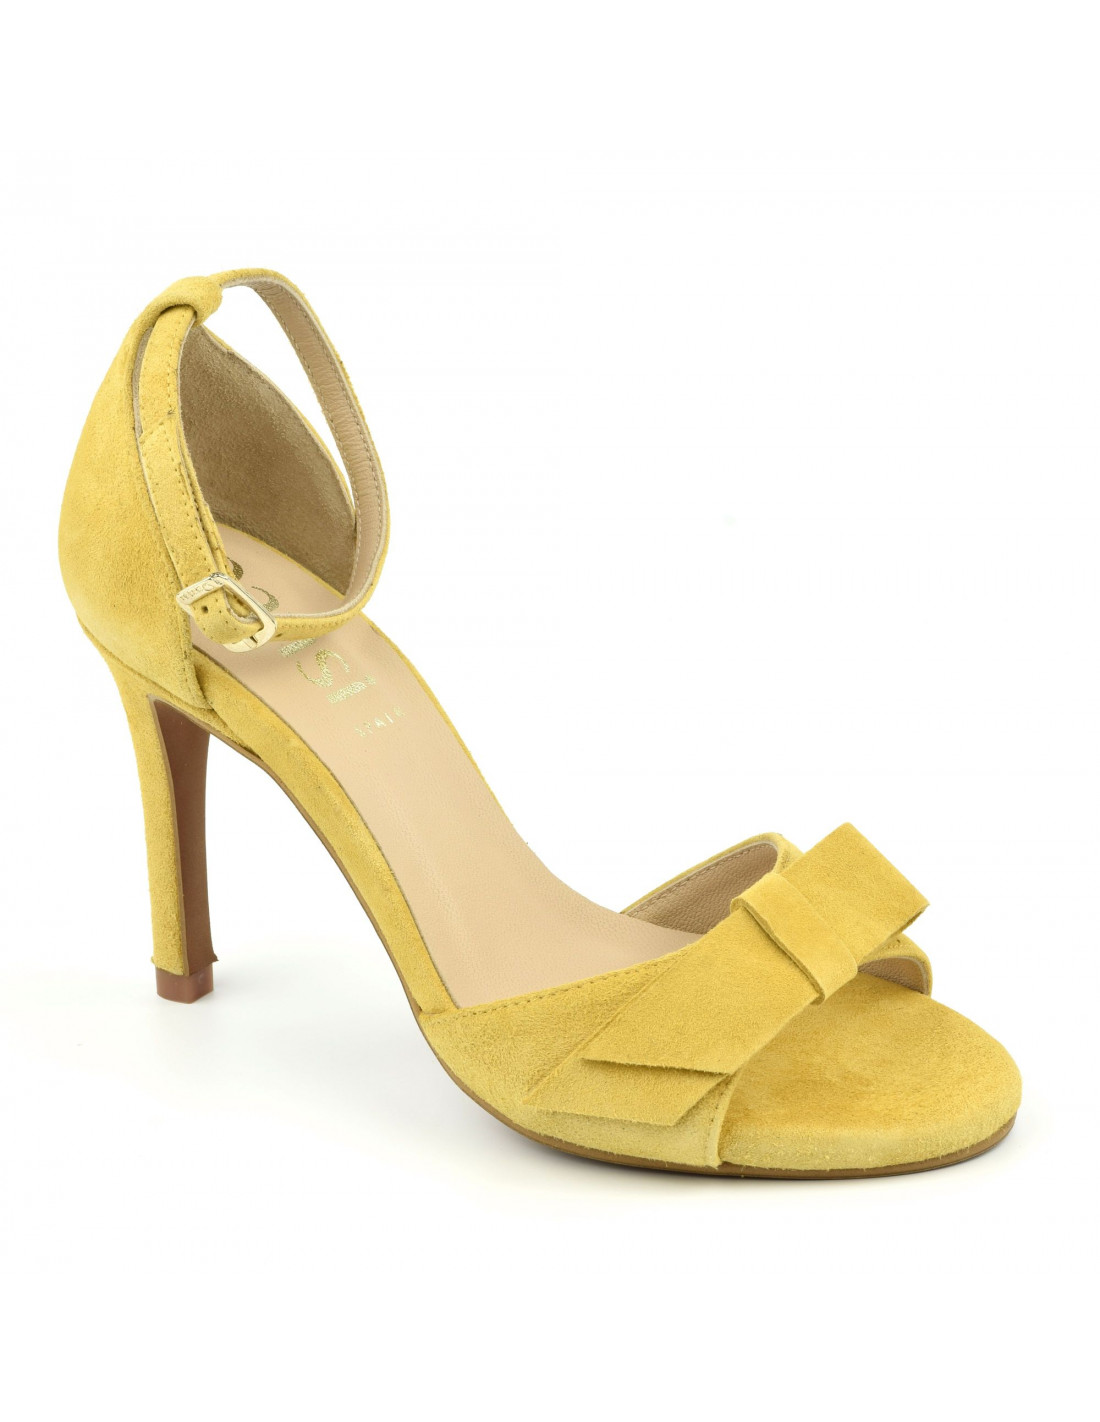 yellow 3 inch heels